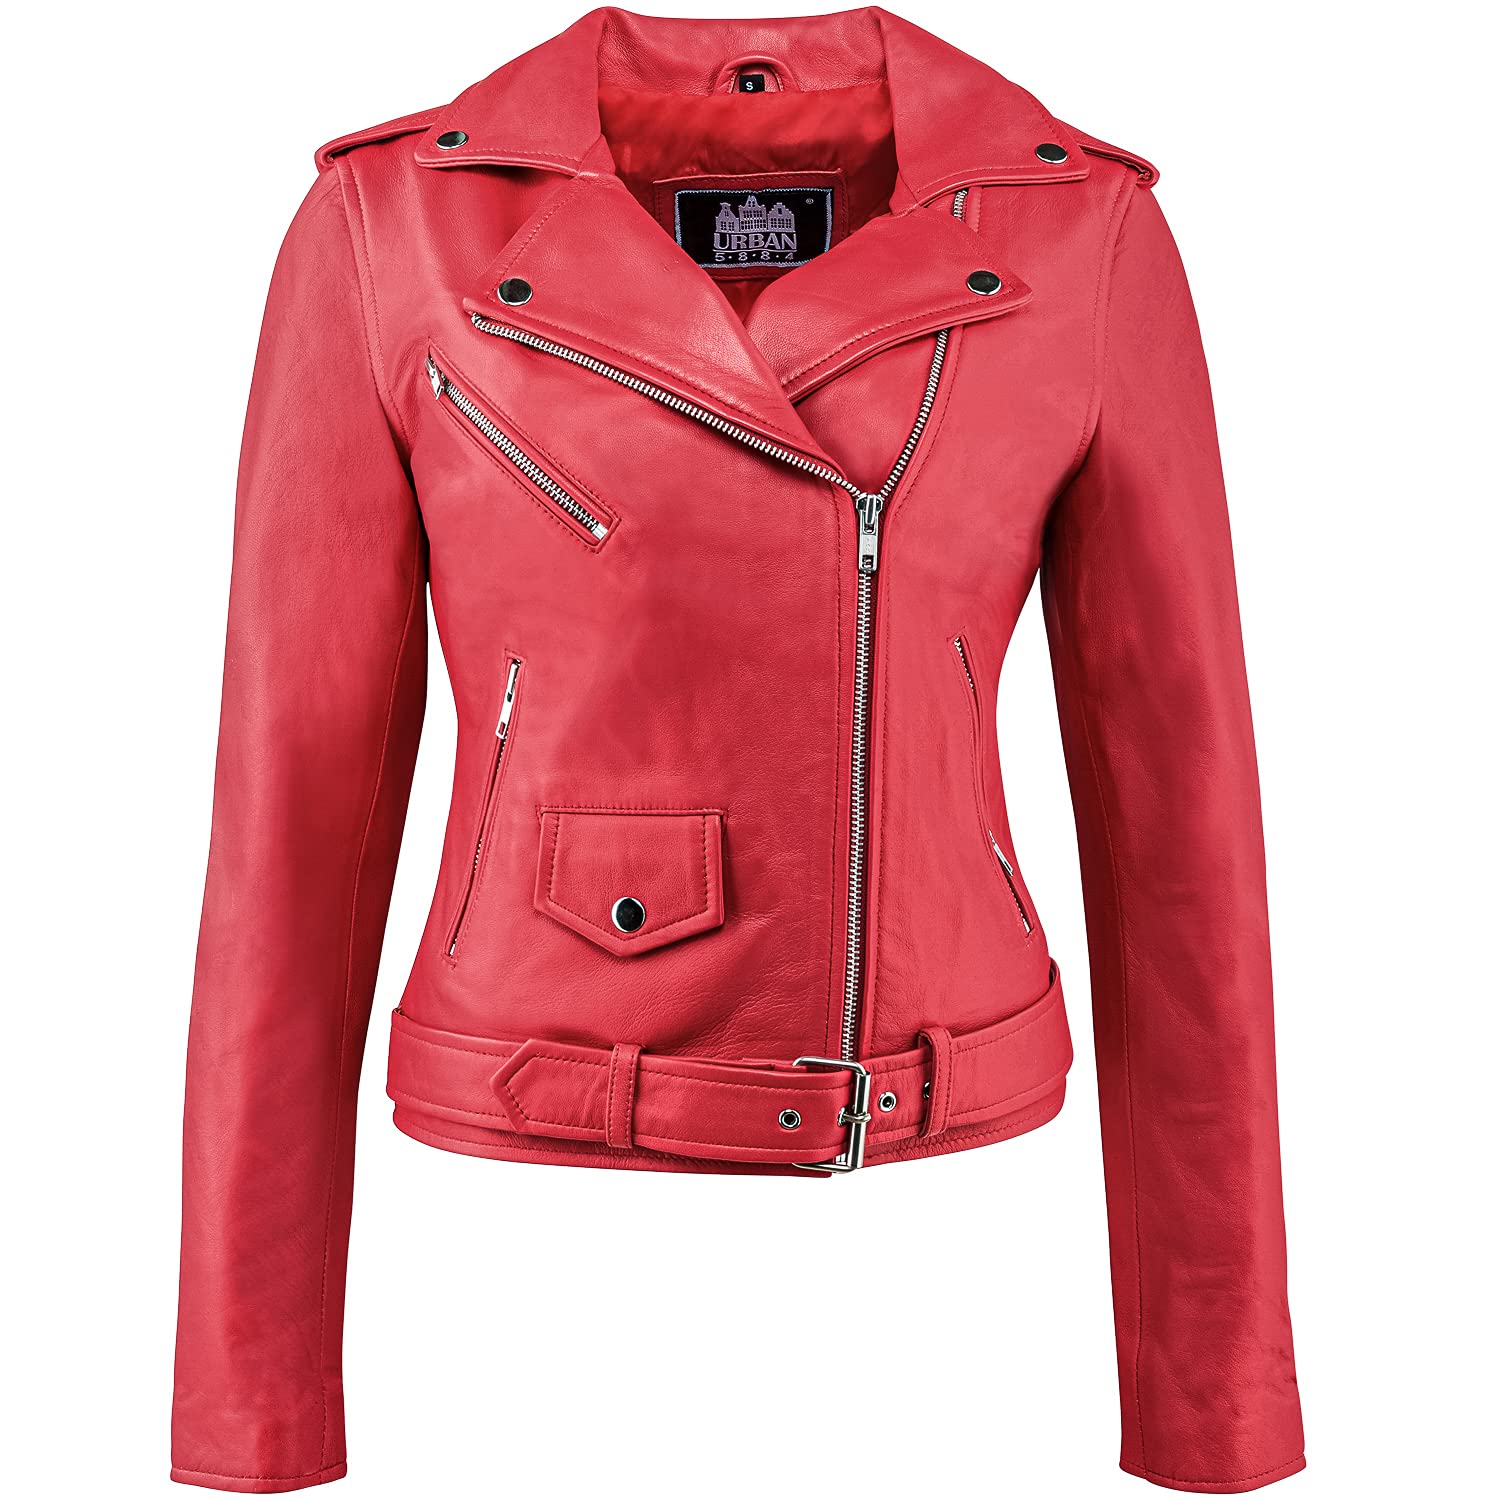 Urban Leather Perfecto Retro Damen Lederjacke Rot Lamm-Nappa, Red, Größe 3XL - 48, UR-197 von Urban Leather